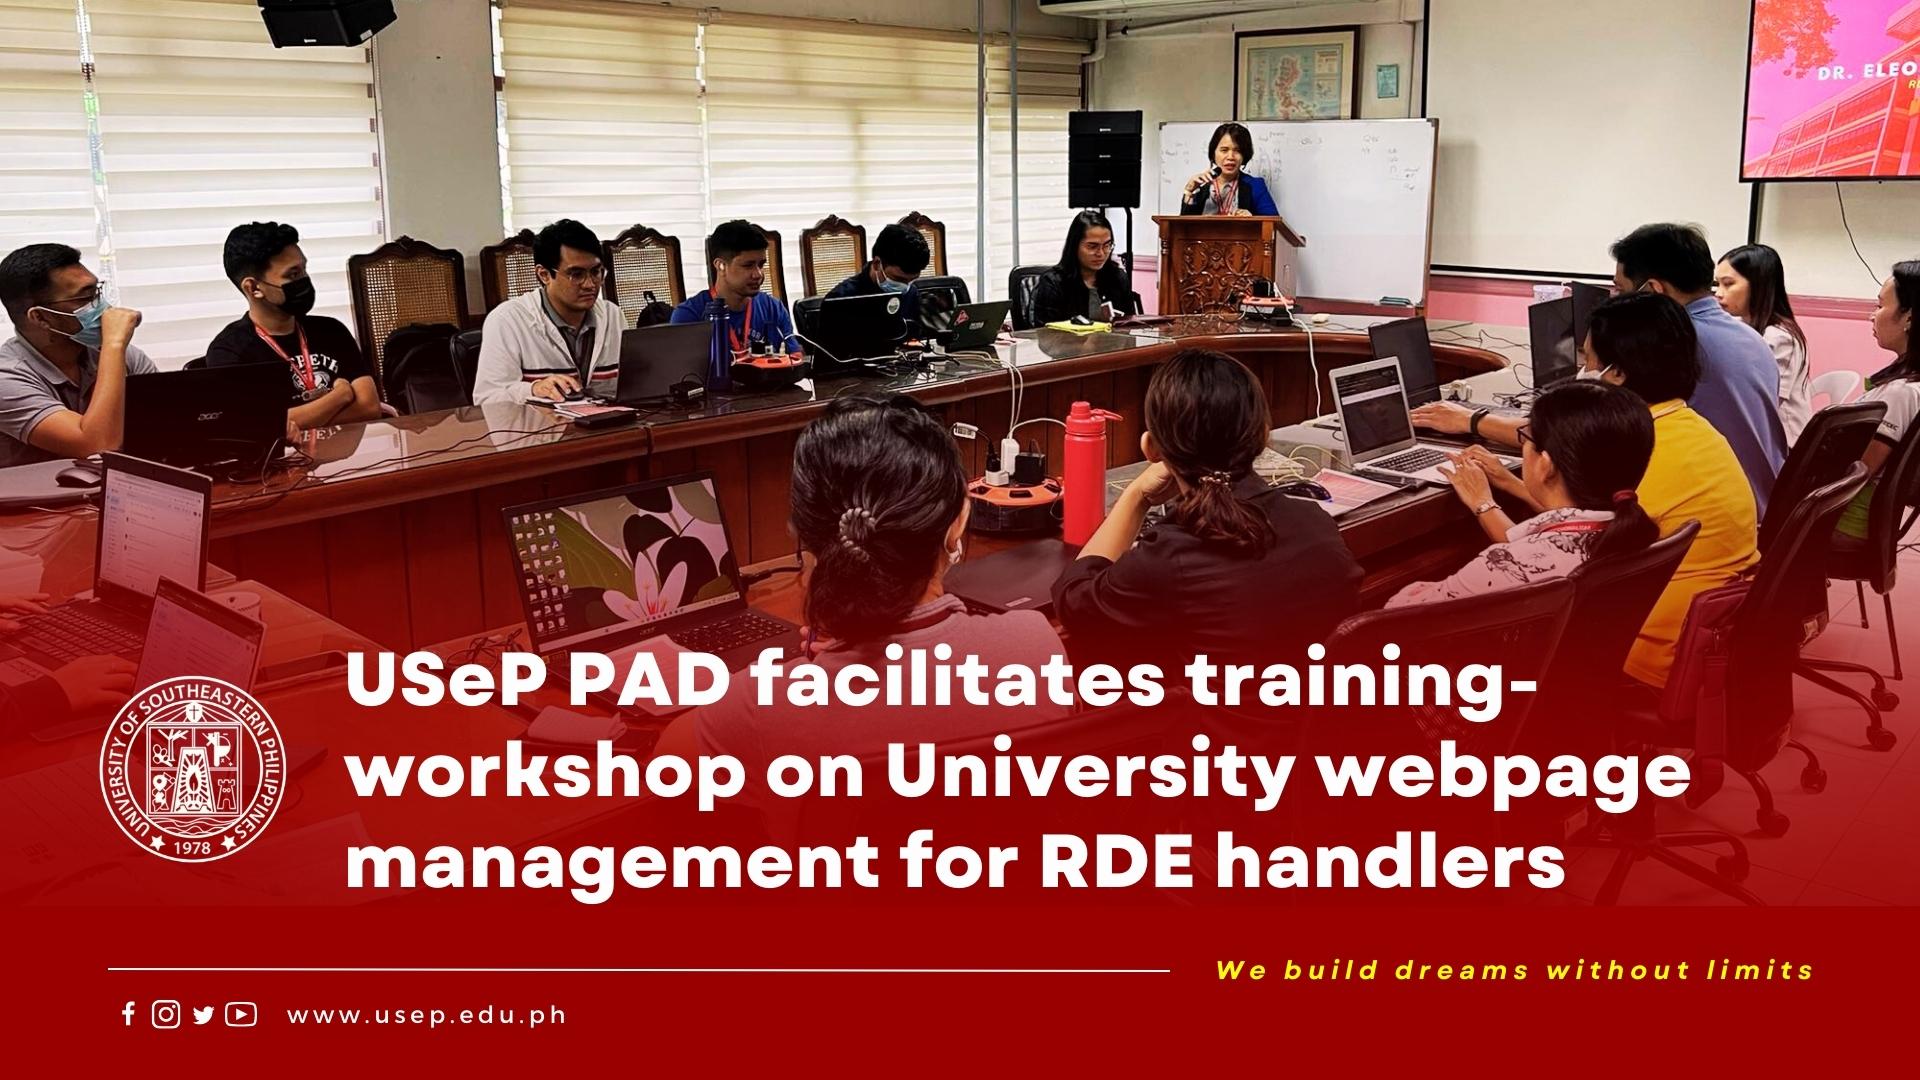 USeP PAD facilitates training-workshop on University webpage management for RDE handlers